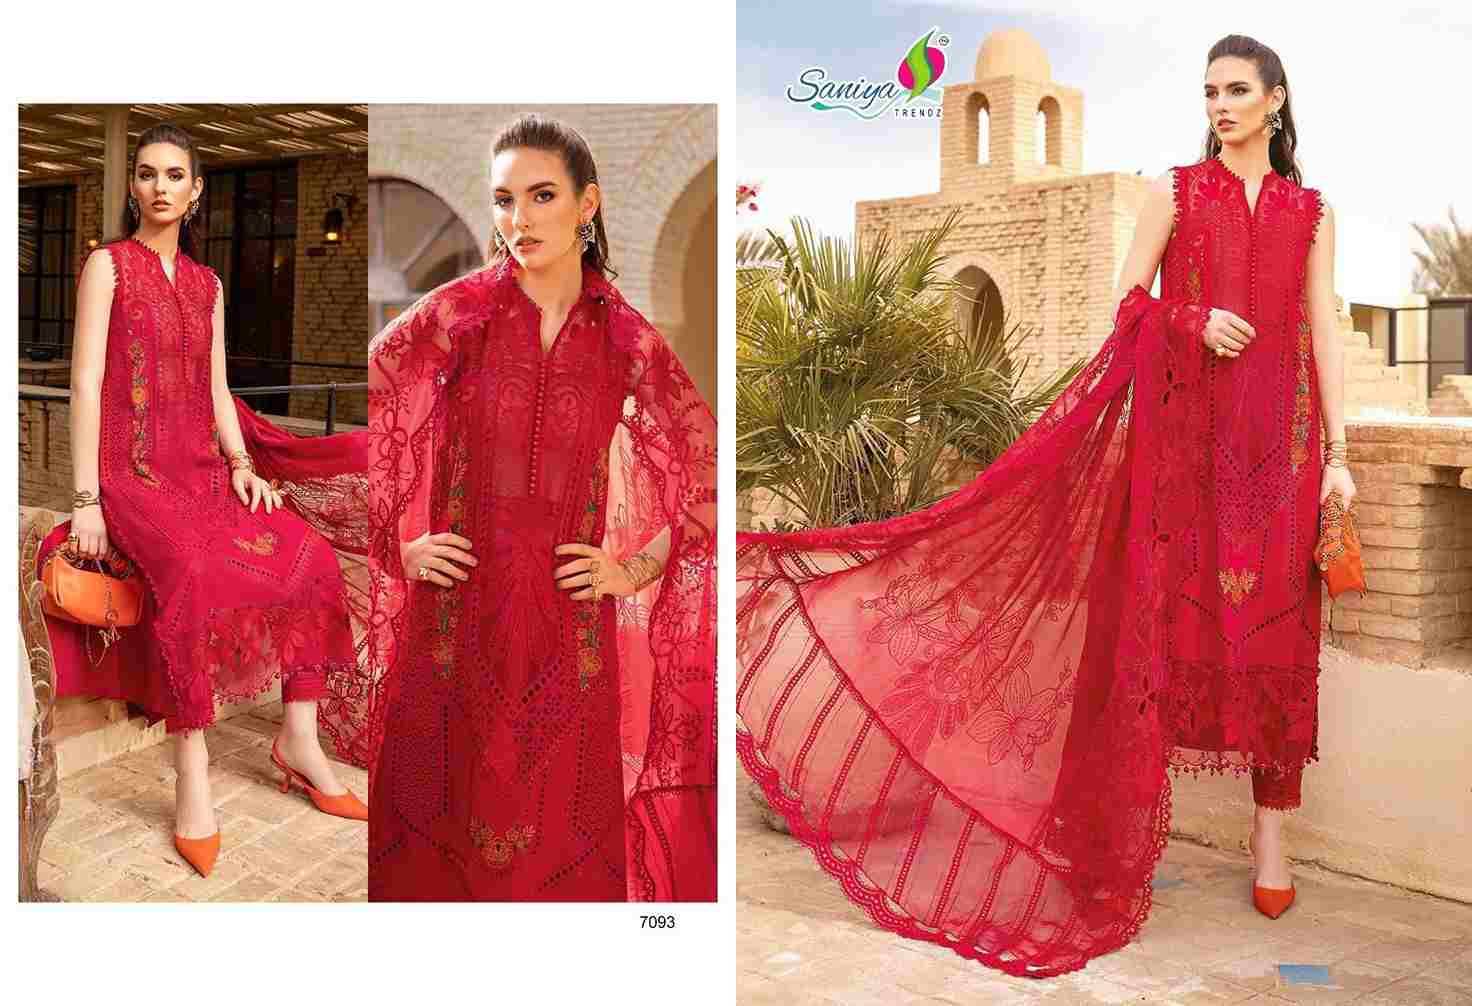 Saniya Trendz Hit Design 7093 By Saniya Trendz Beautiful Pakistani Suits Colorful Stylish Fancy Casual Wear & Ethnic Wear Cotton Embroidered Dresses At Wholesale Price